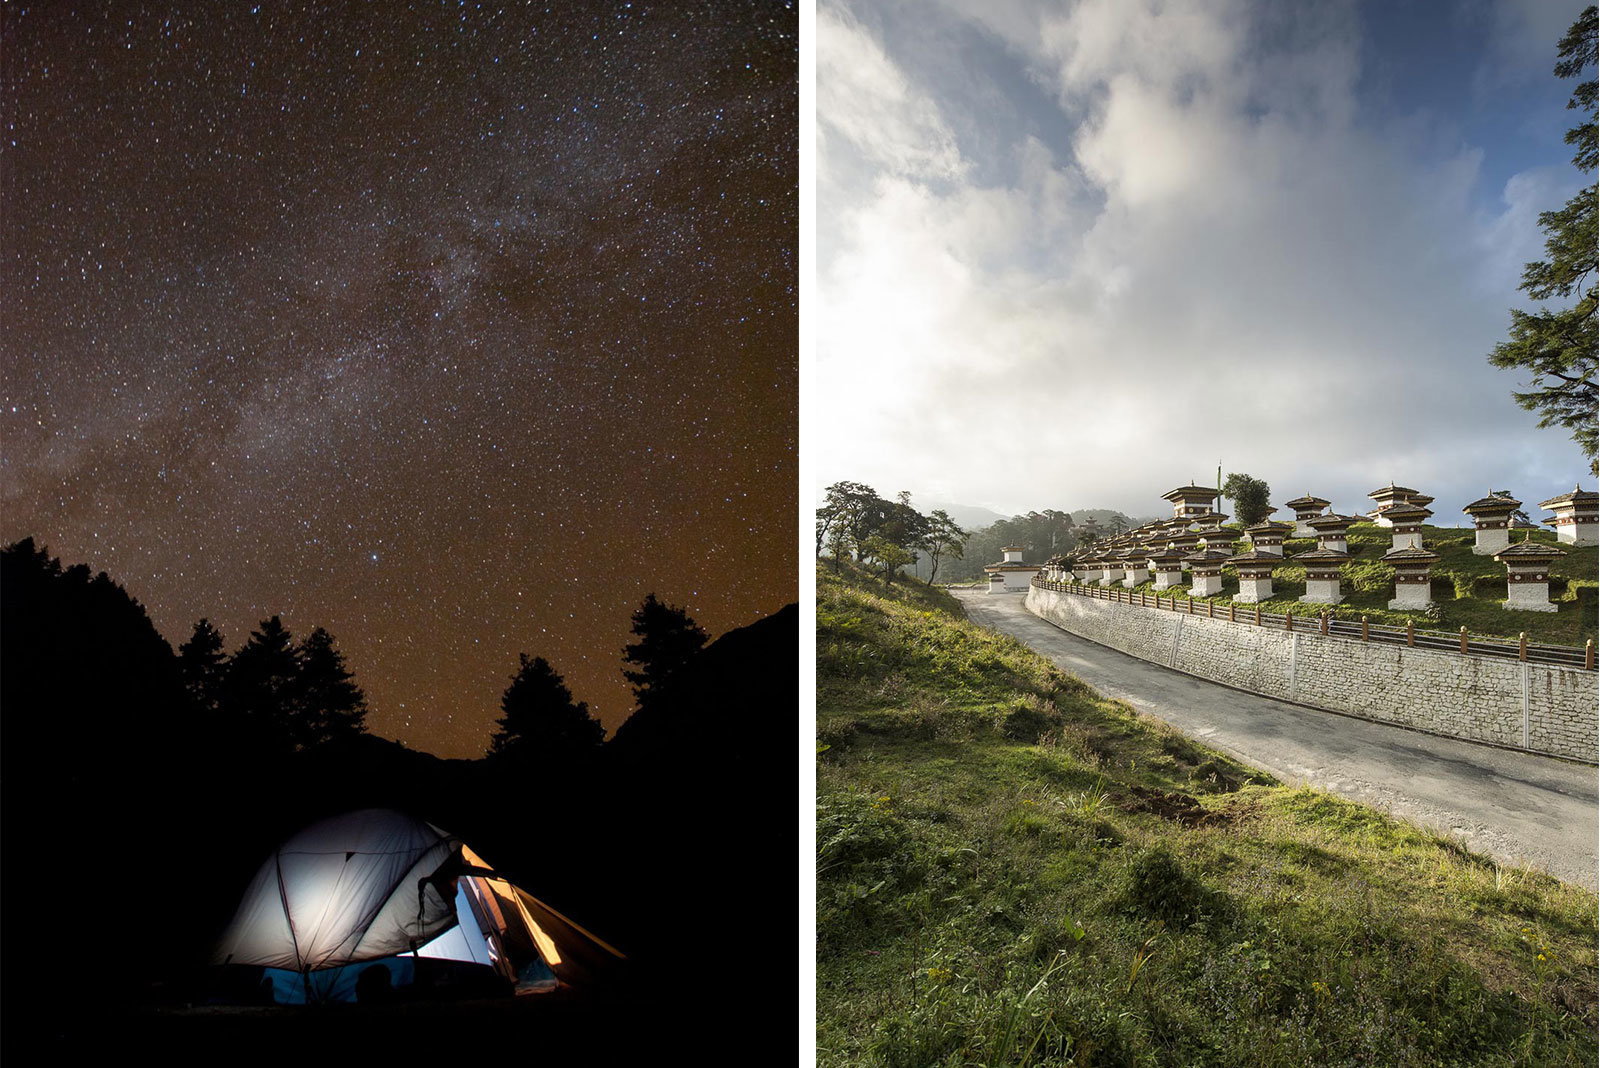 Stargazing in Bhutan